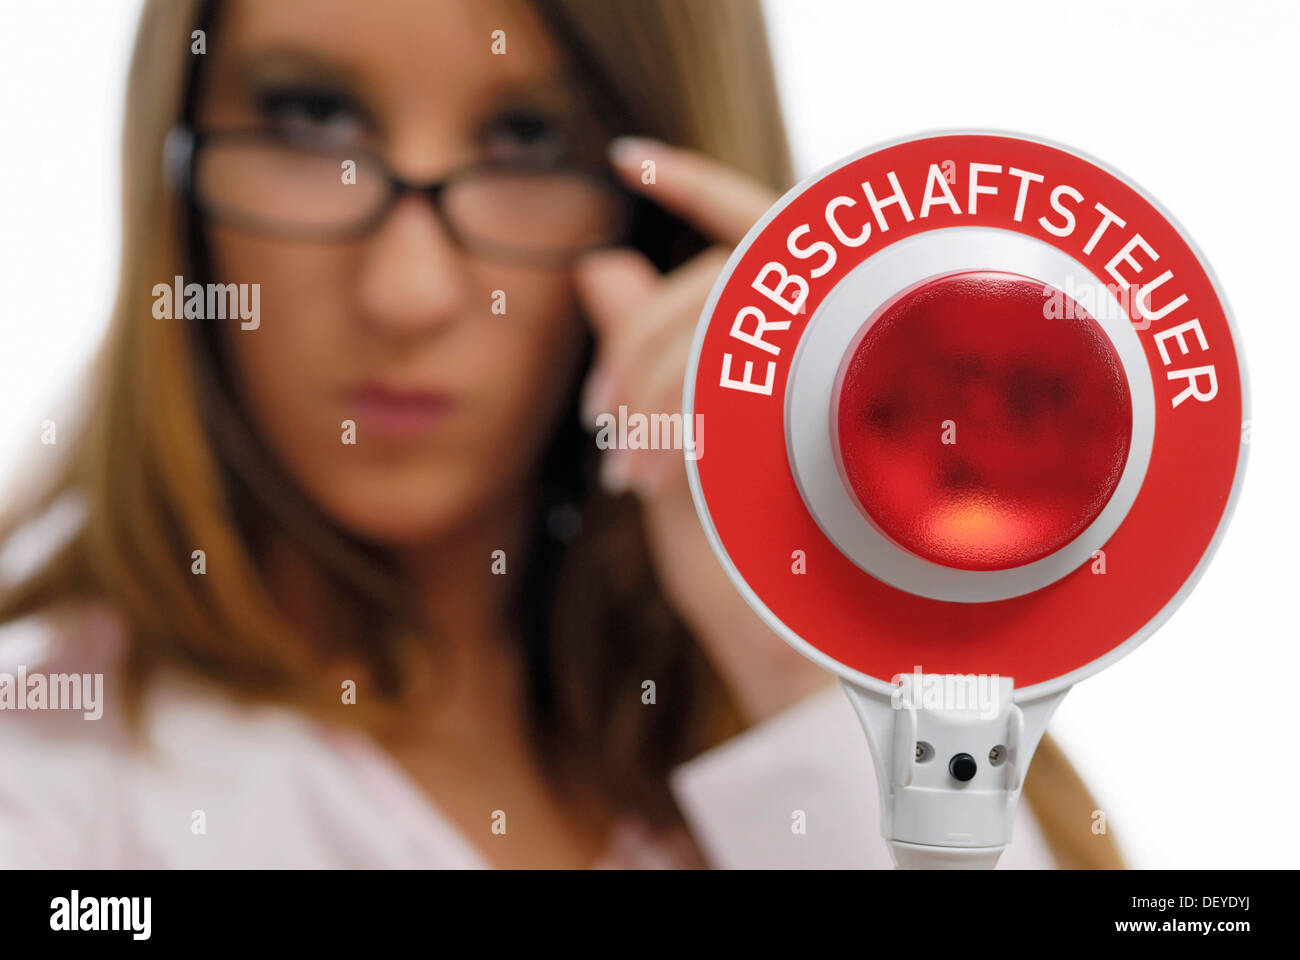 Woman holding a red police signalling disk, Erbschaftssteuer, inheritance tax written on it Stock Photo